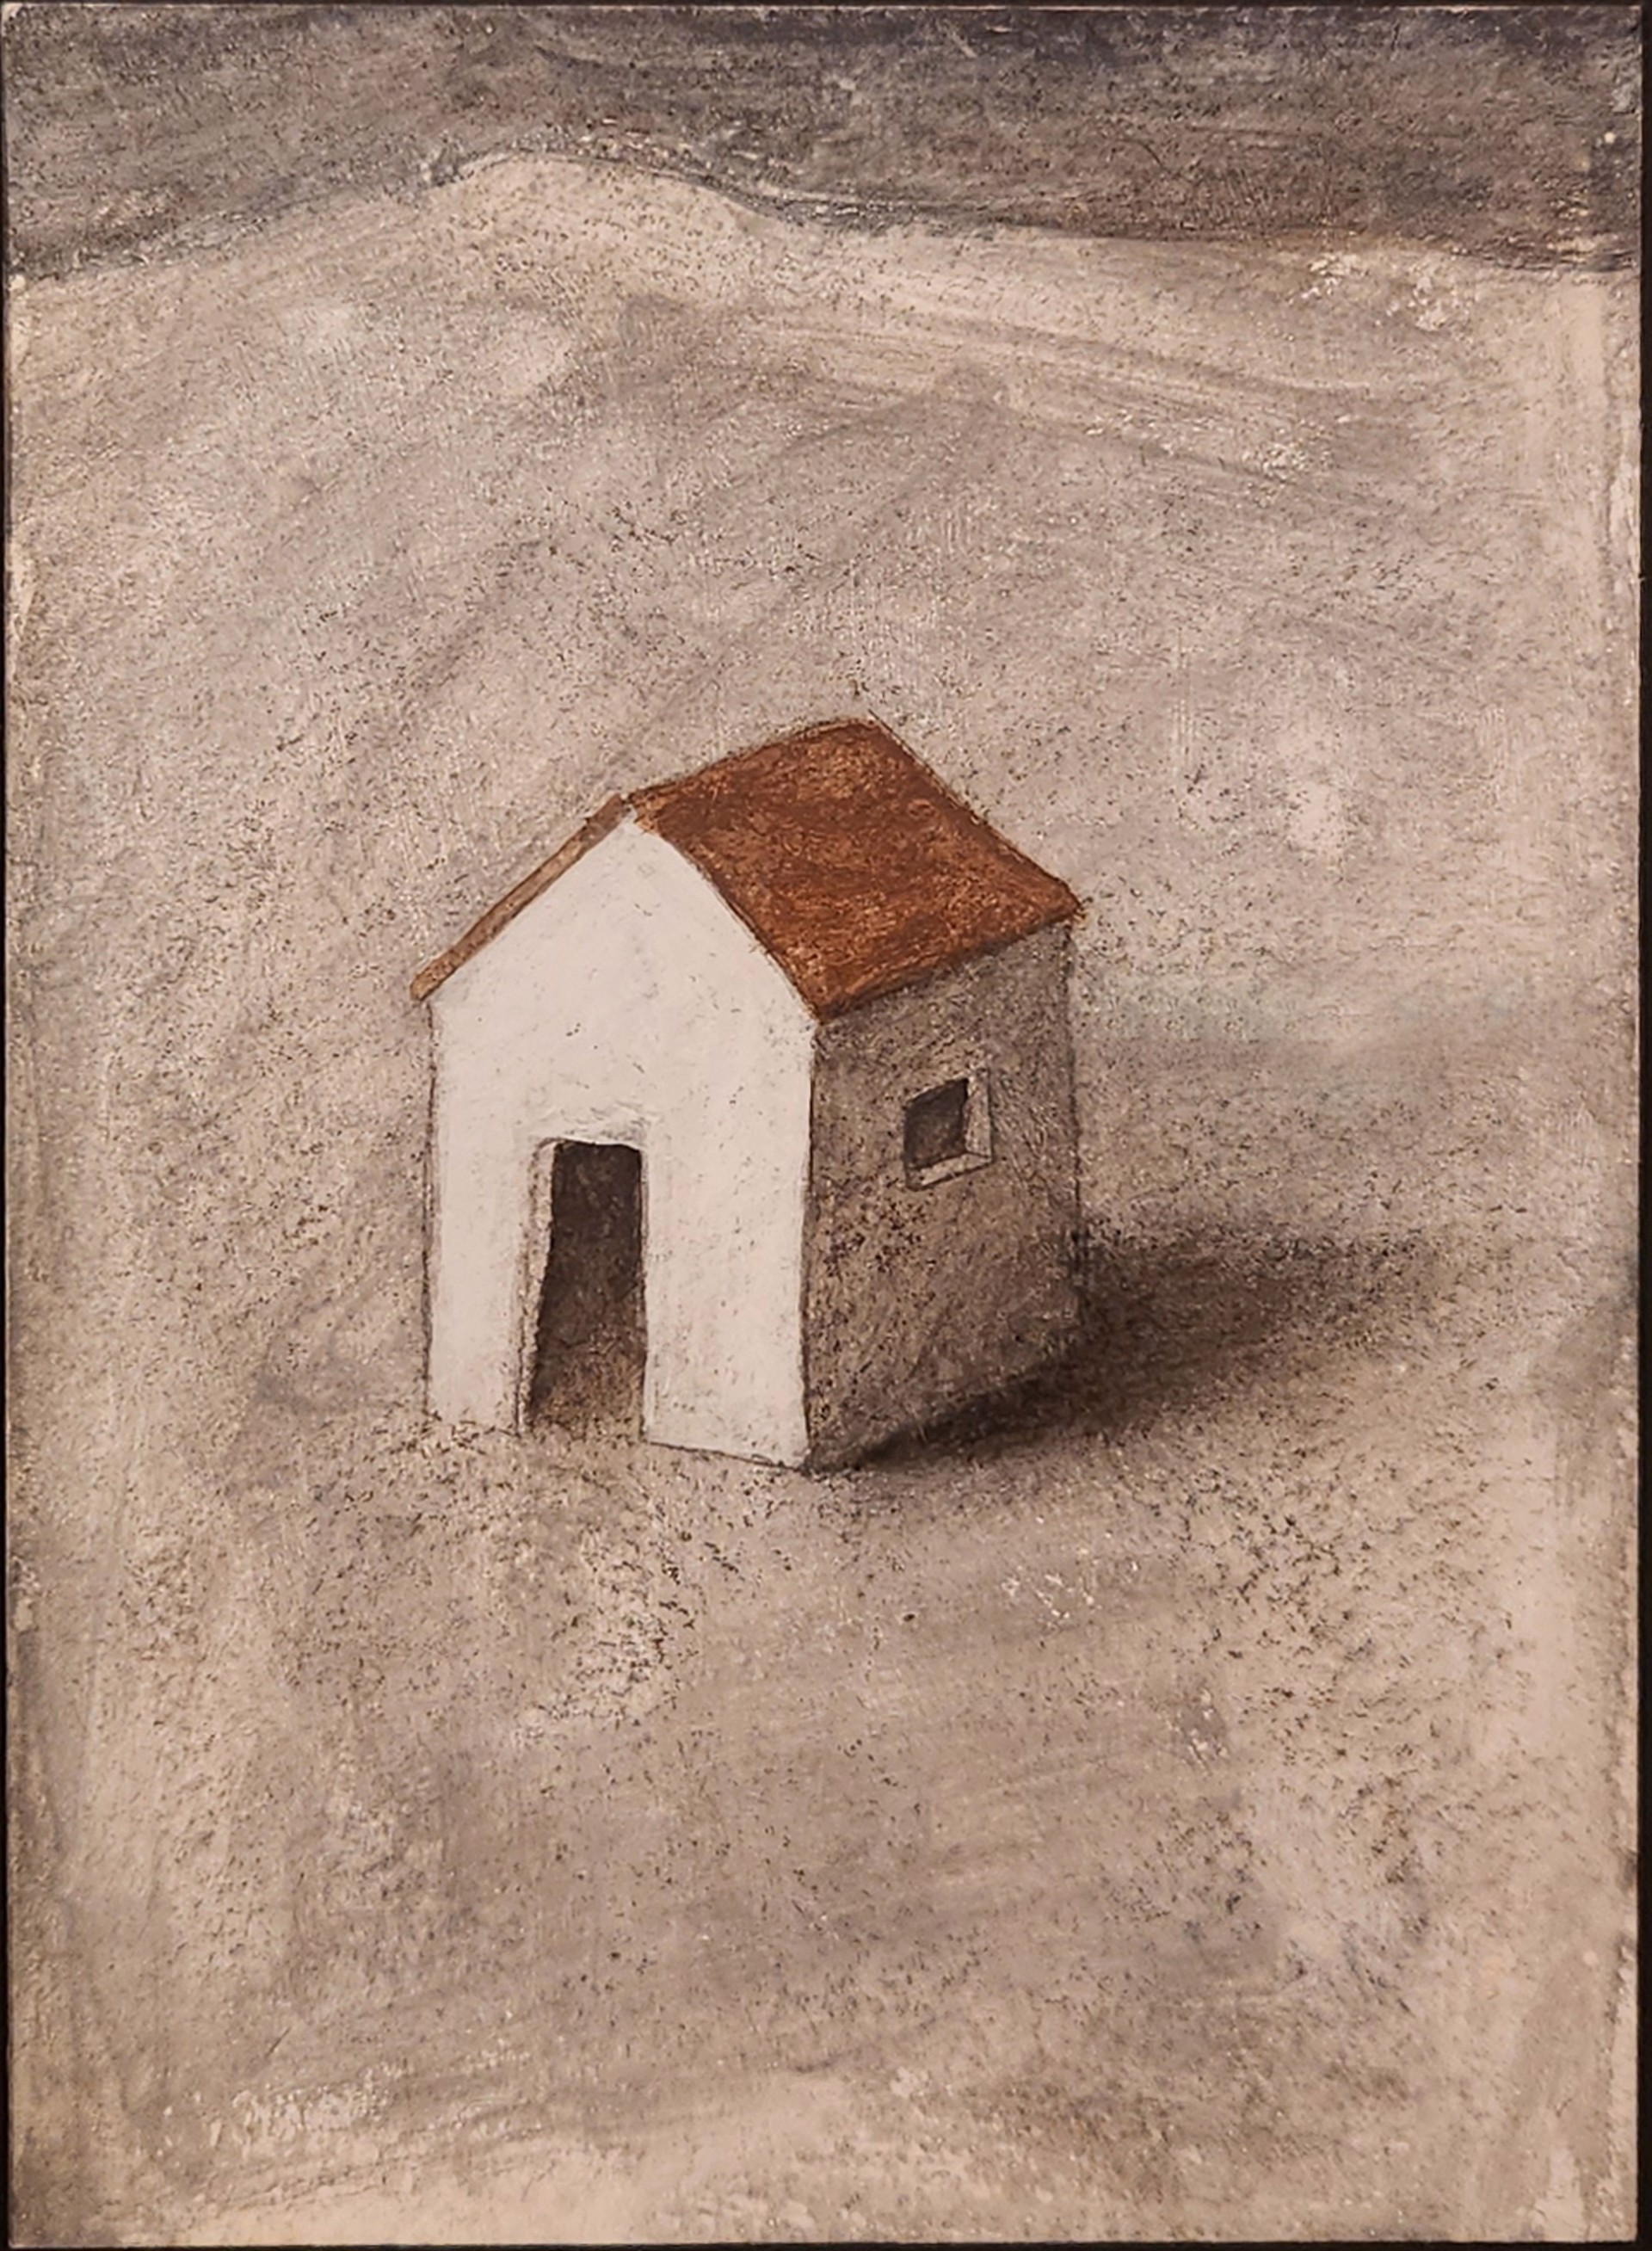 Little House on Little Hill by Jeff Donovan